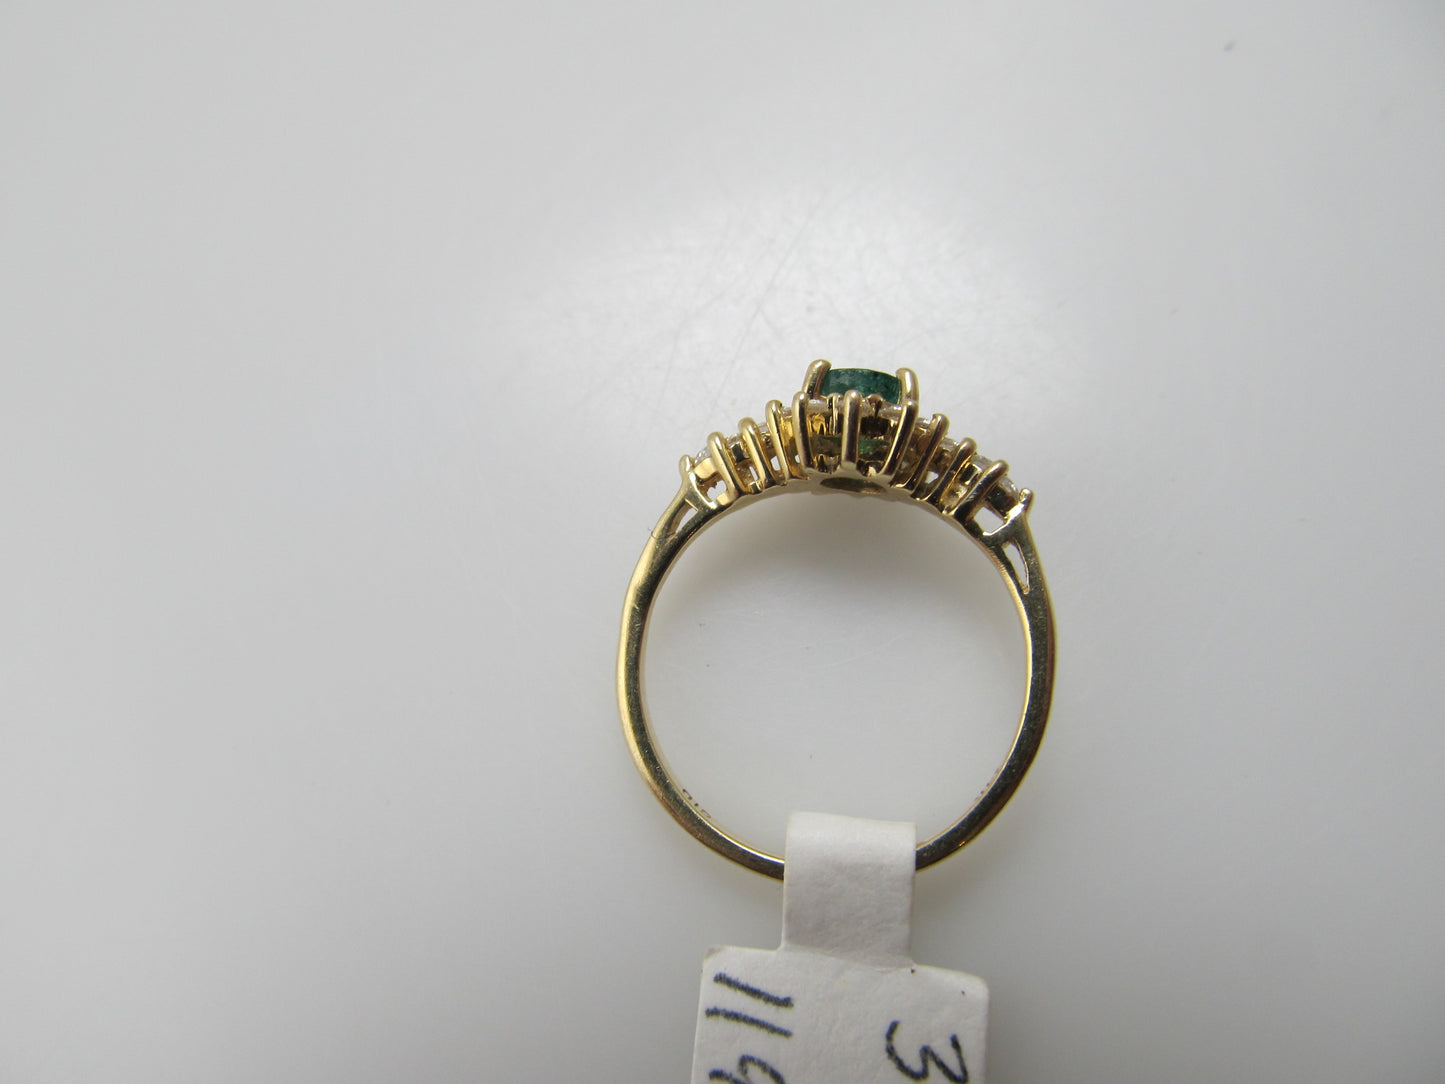 Emerald and diamond pinky ring